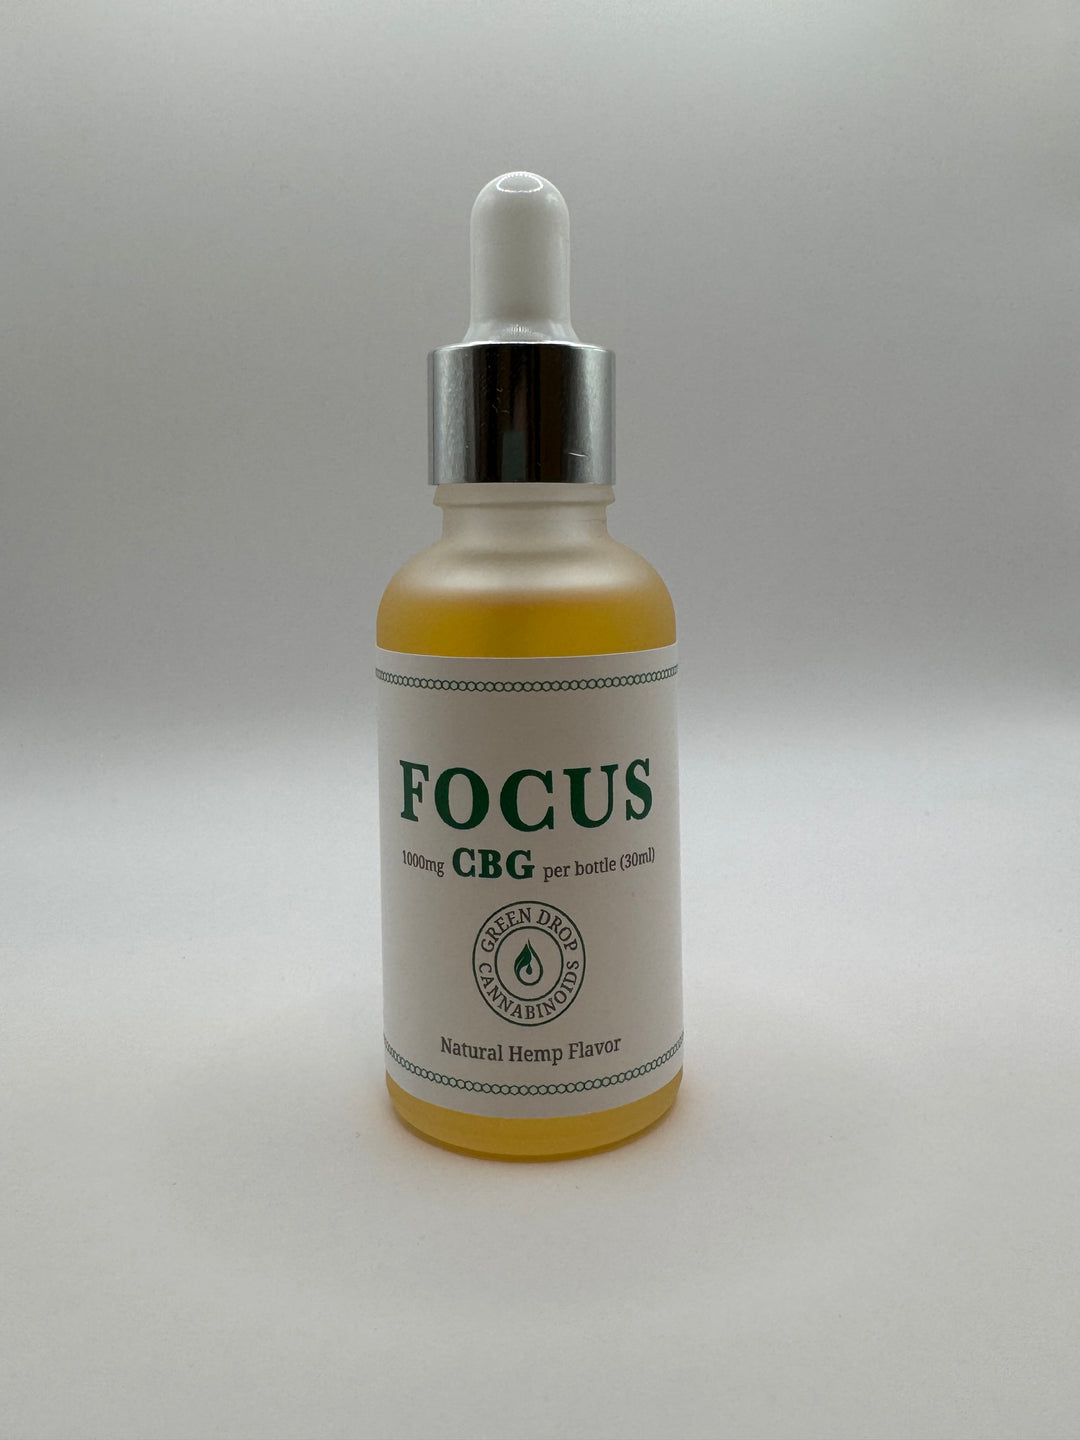 Green Drop Cannabinoids "Focus" 1000mg Full Spectrum CBG Oil Tincture